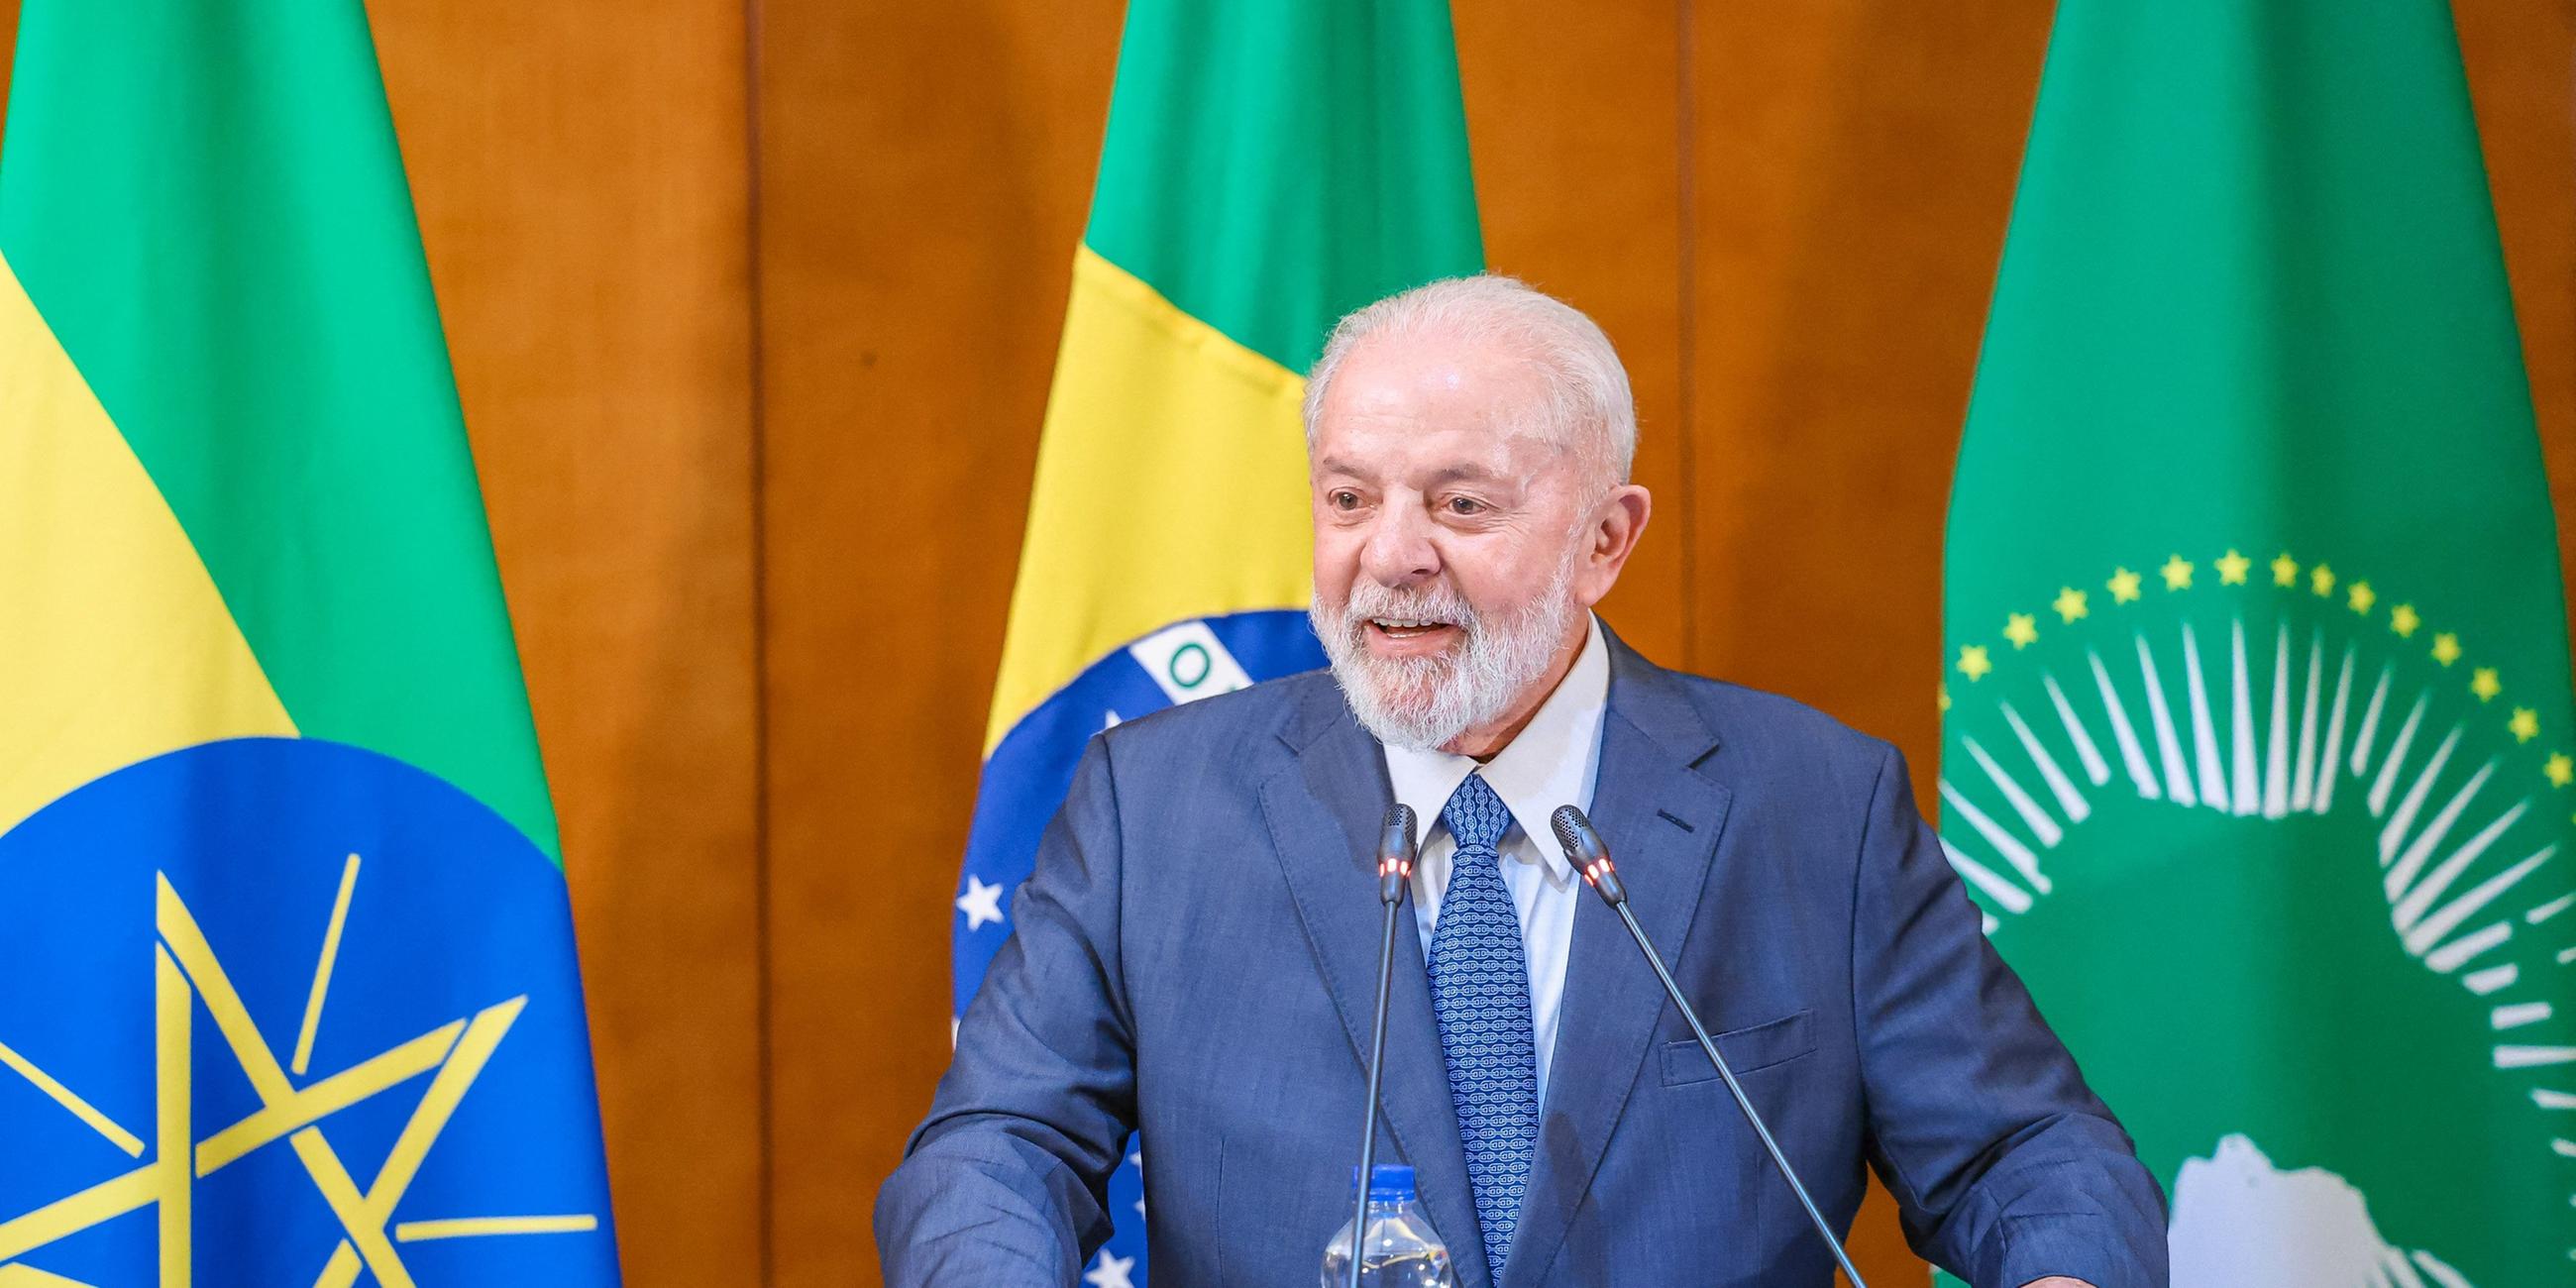 Brassiliens Präsident Lula da Silva